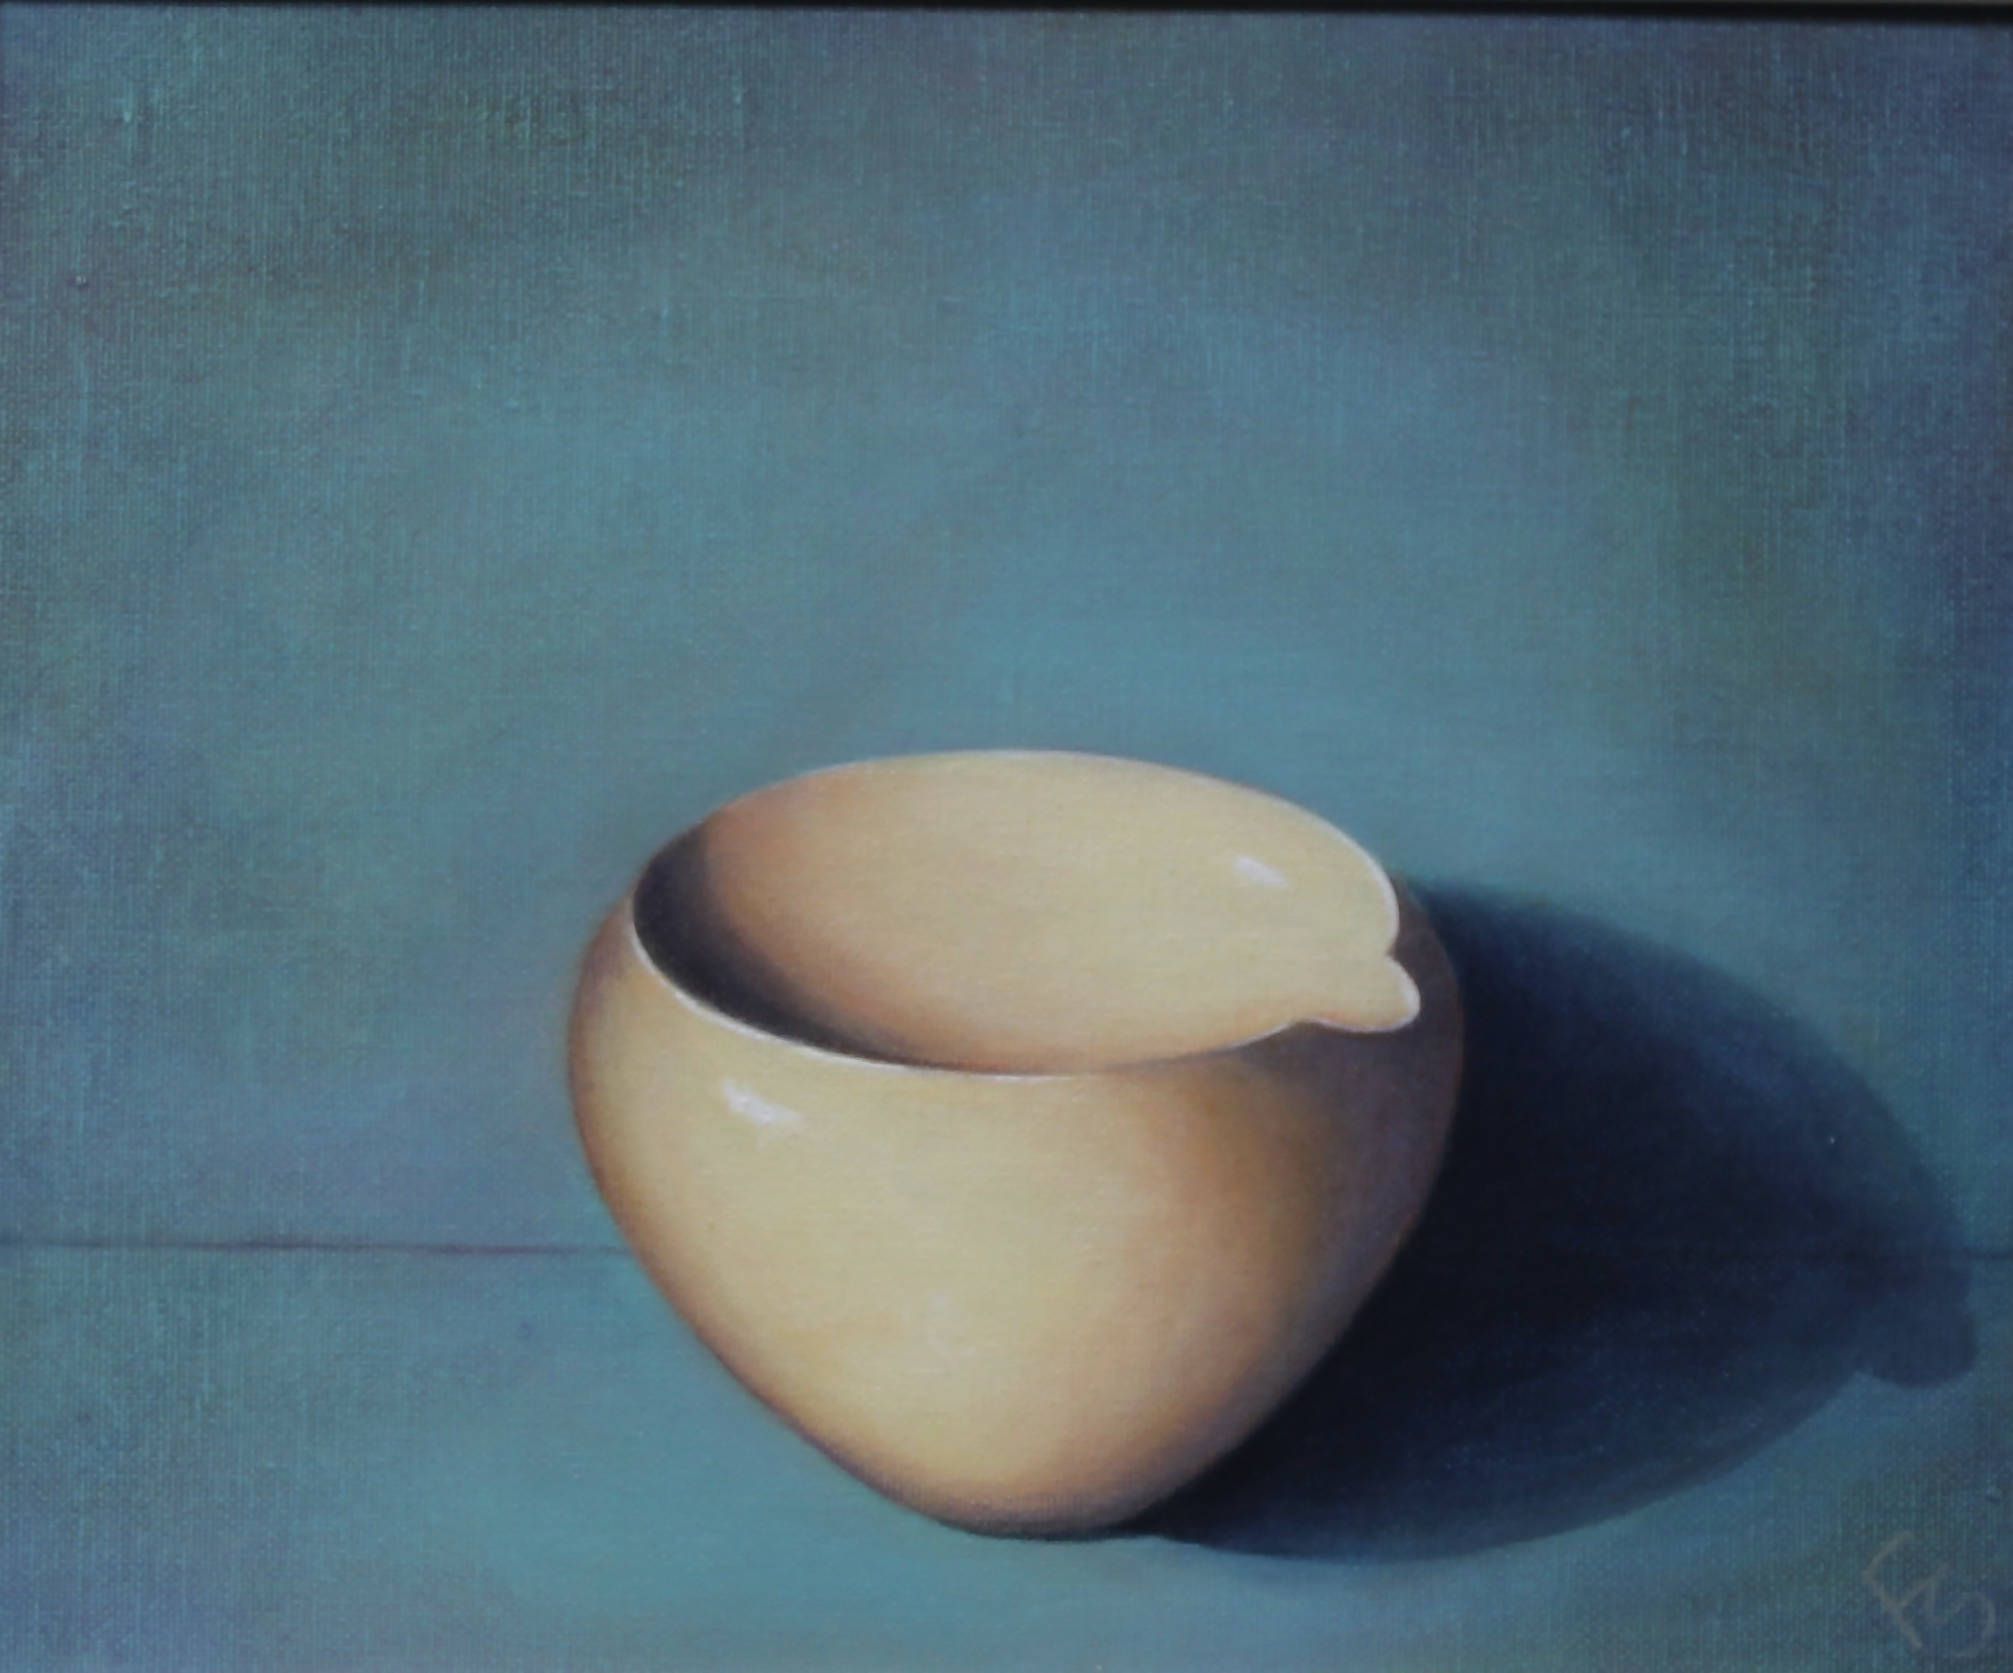 Fiona Smith "Pouring Bowl 1" by Fiona Smith